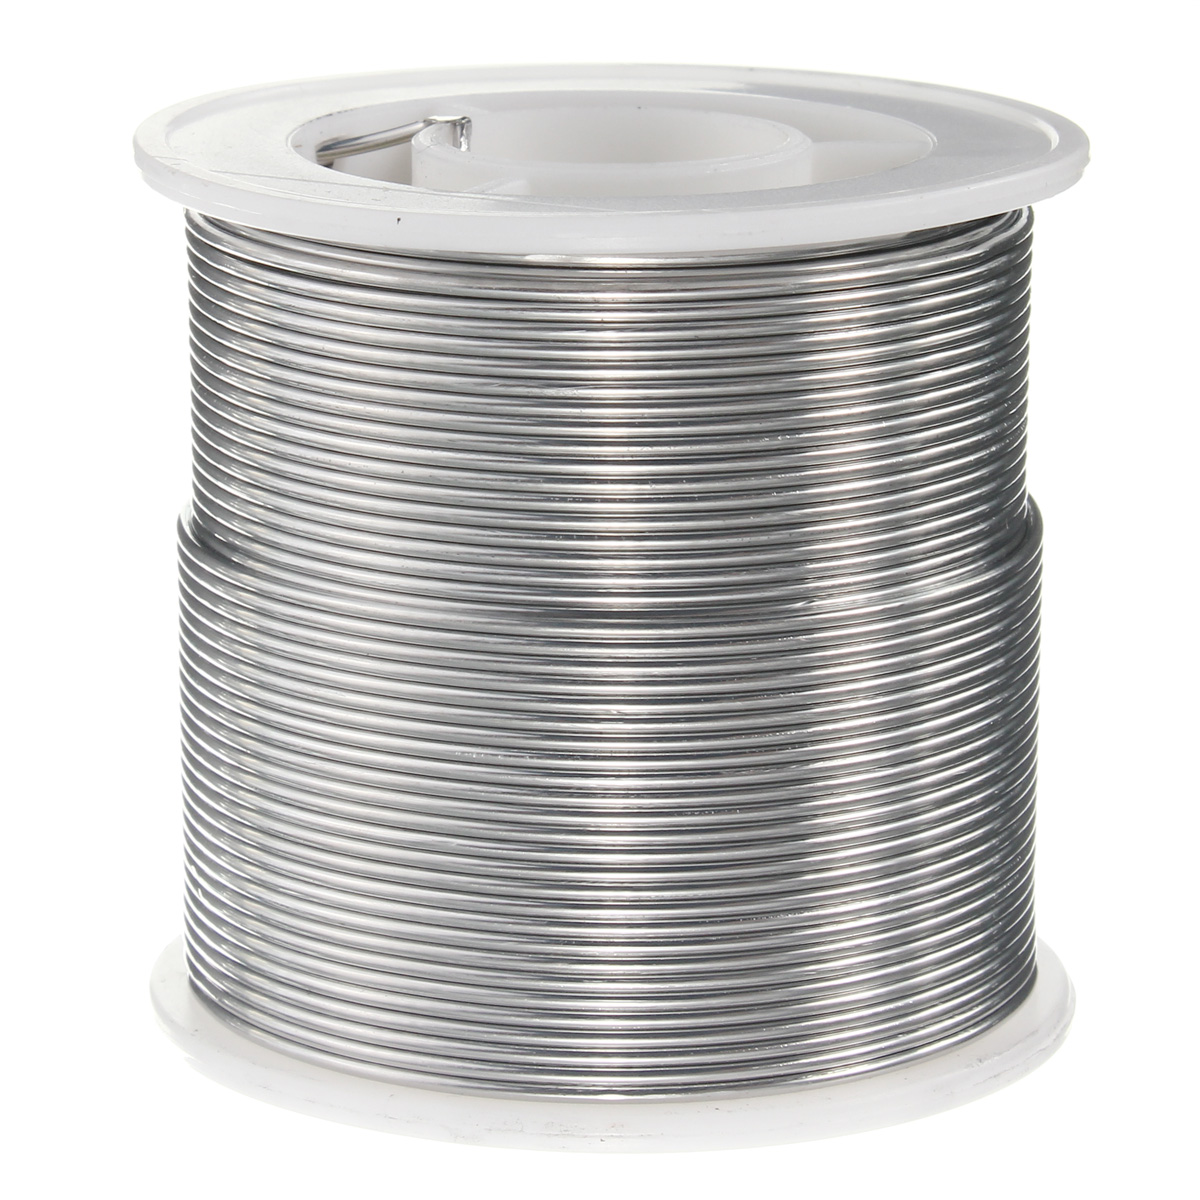 

250g 1mm Solder Wire Tin Lead 60/40 2% Flux Soldering Welding Iron